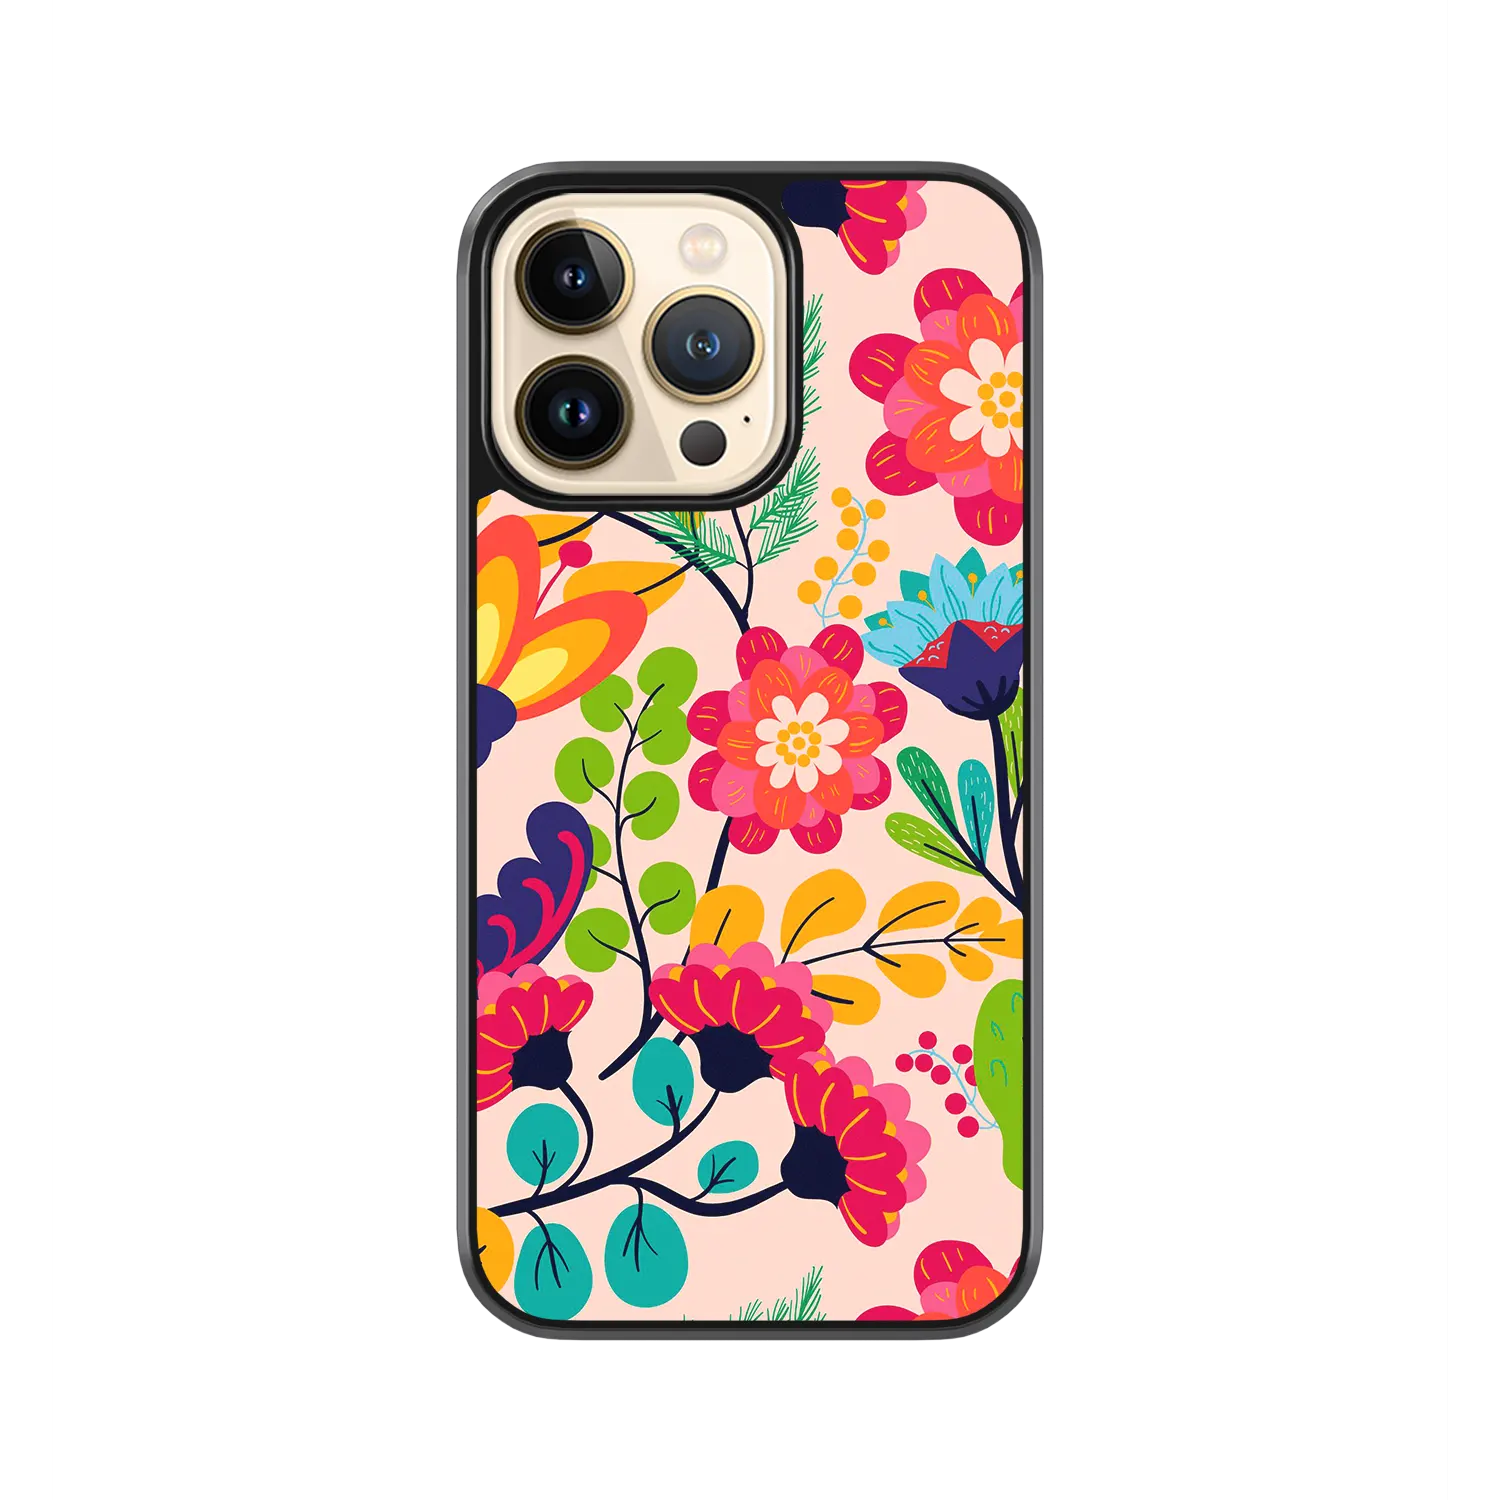 Exotic-Bloom-iPhone-11-Pro-Max-Case.webp